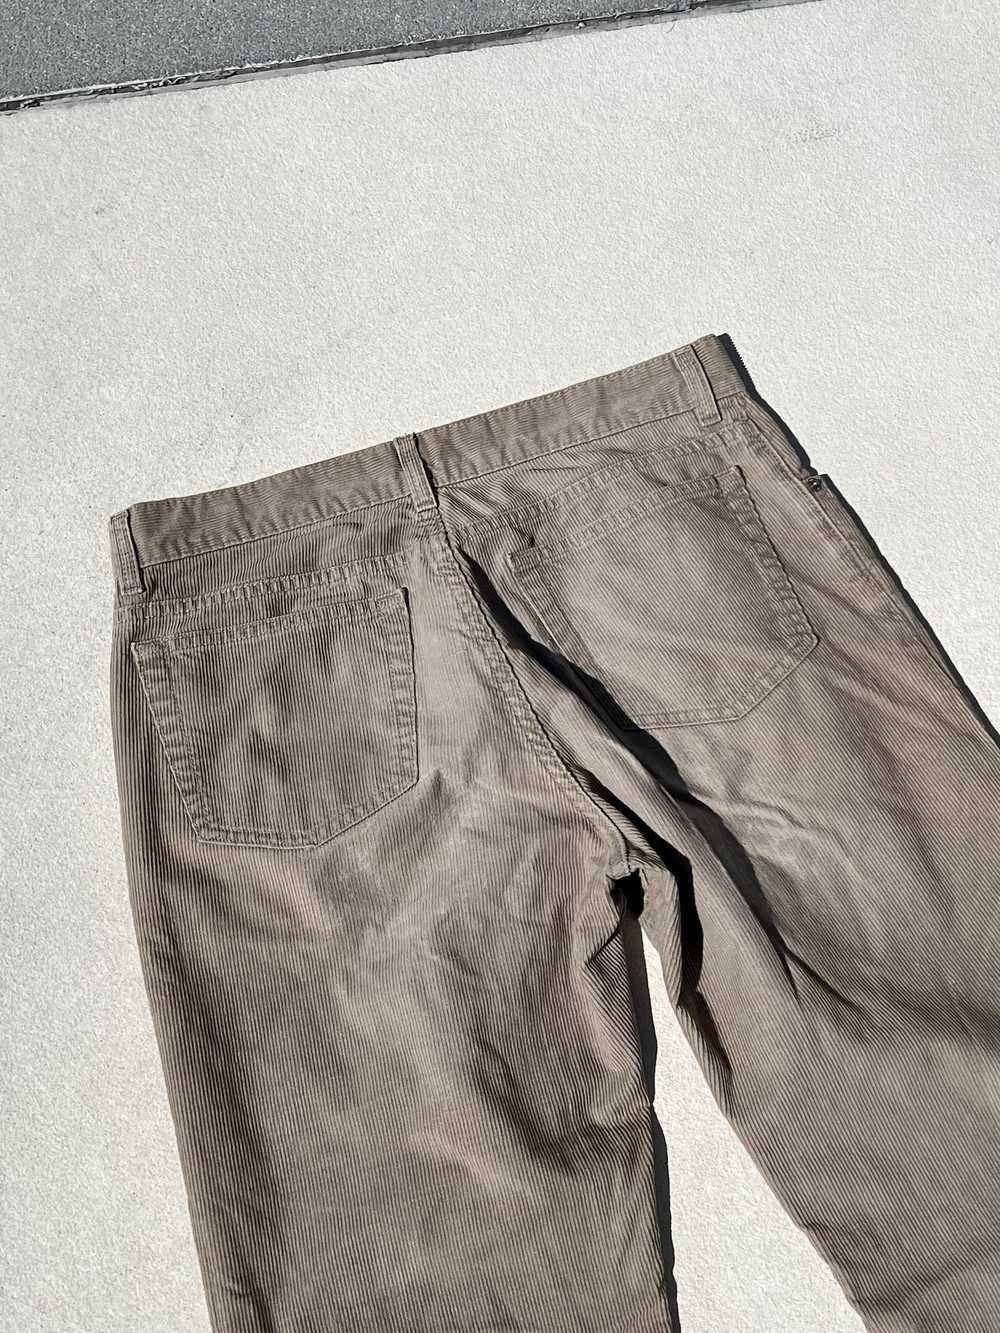 Helmut Lang Helmut Lang Vintage Corduroy Pants - image 6